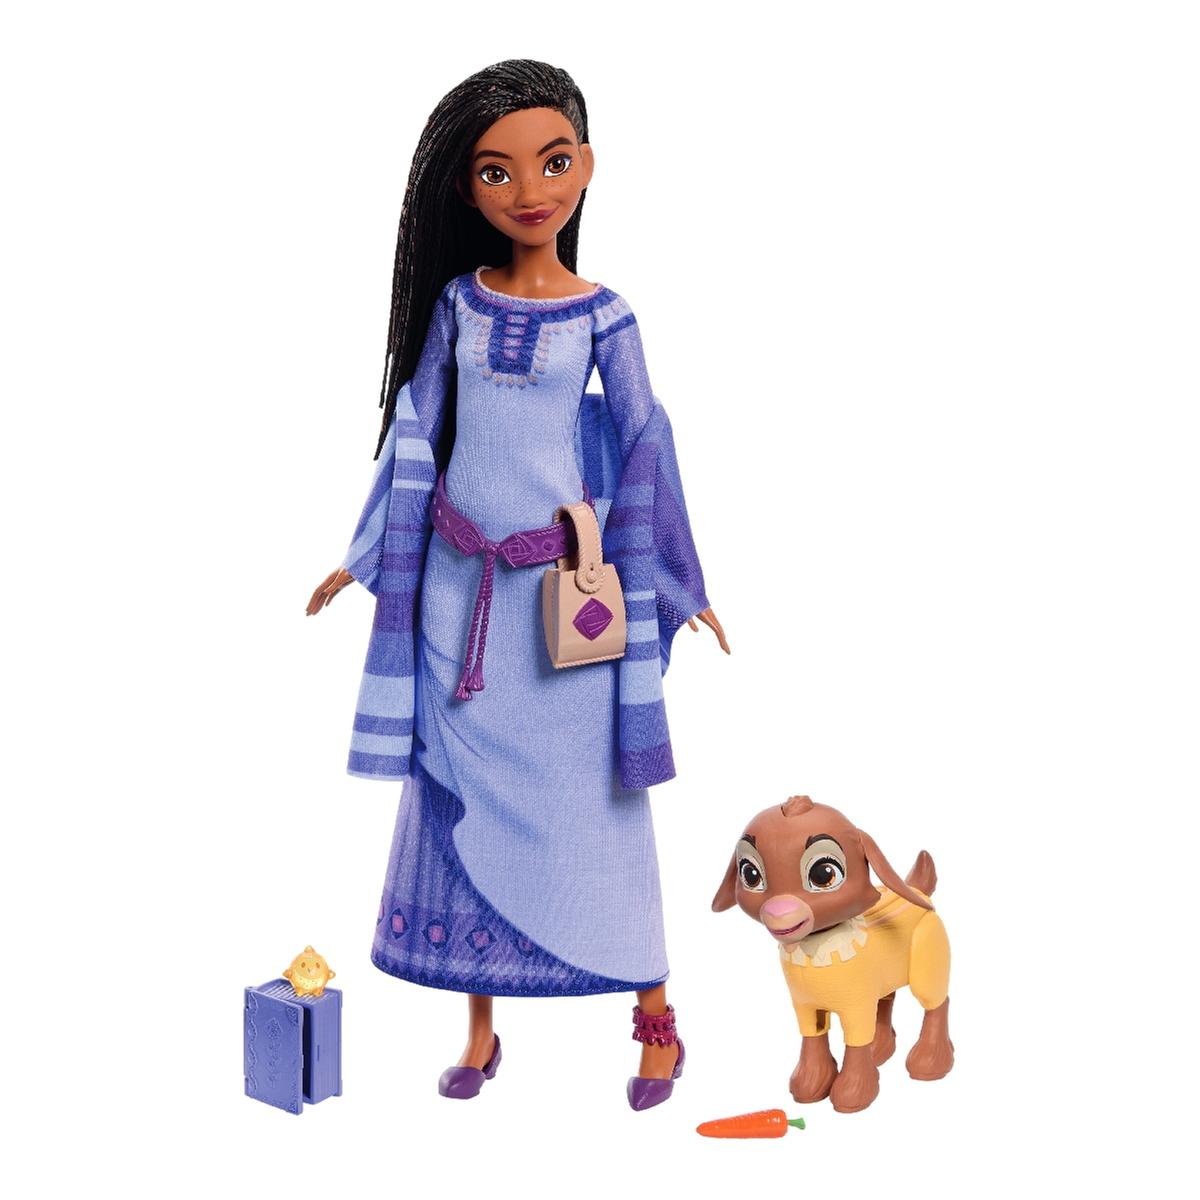 Disney - Wish - Asha con accesorios | Muñecas Princesas Disney & Accesorios  | Toys"R"Us España